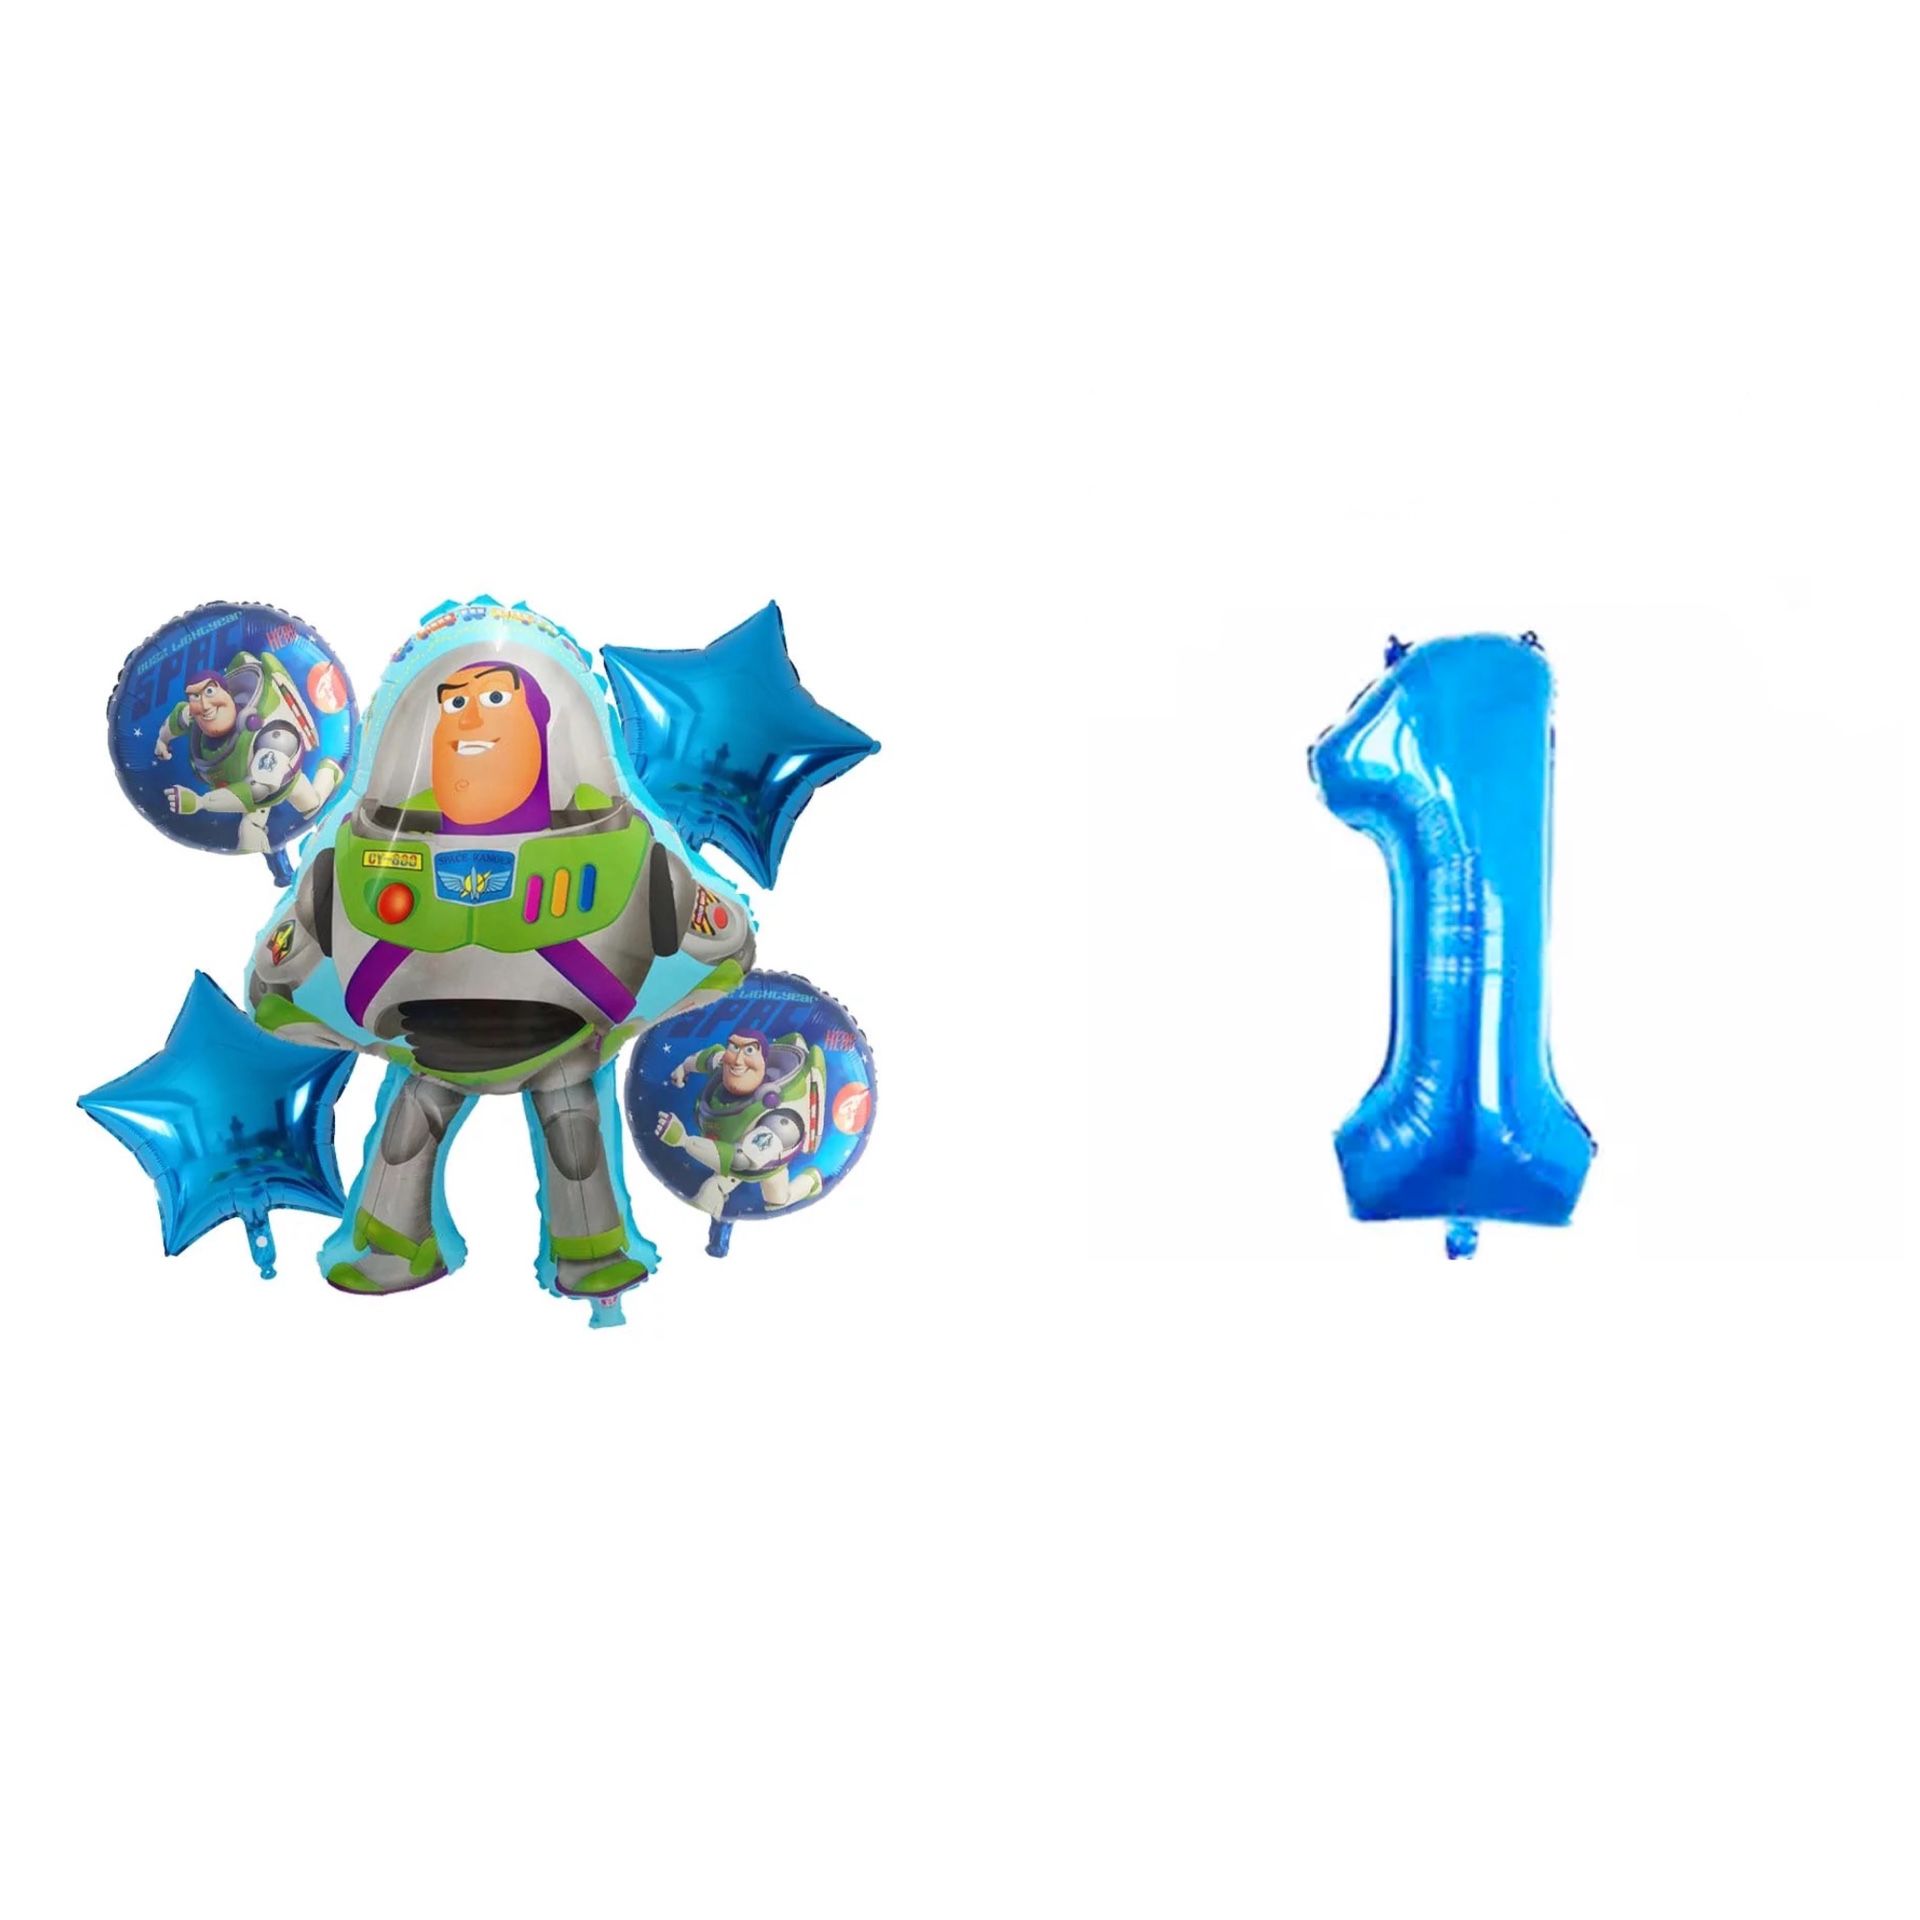 Toy Story “Buzz Lightyear” 6pcs foil balloons.